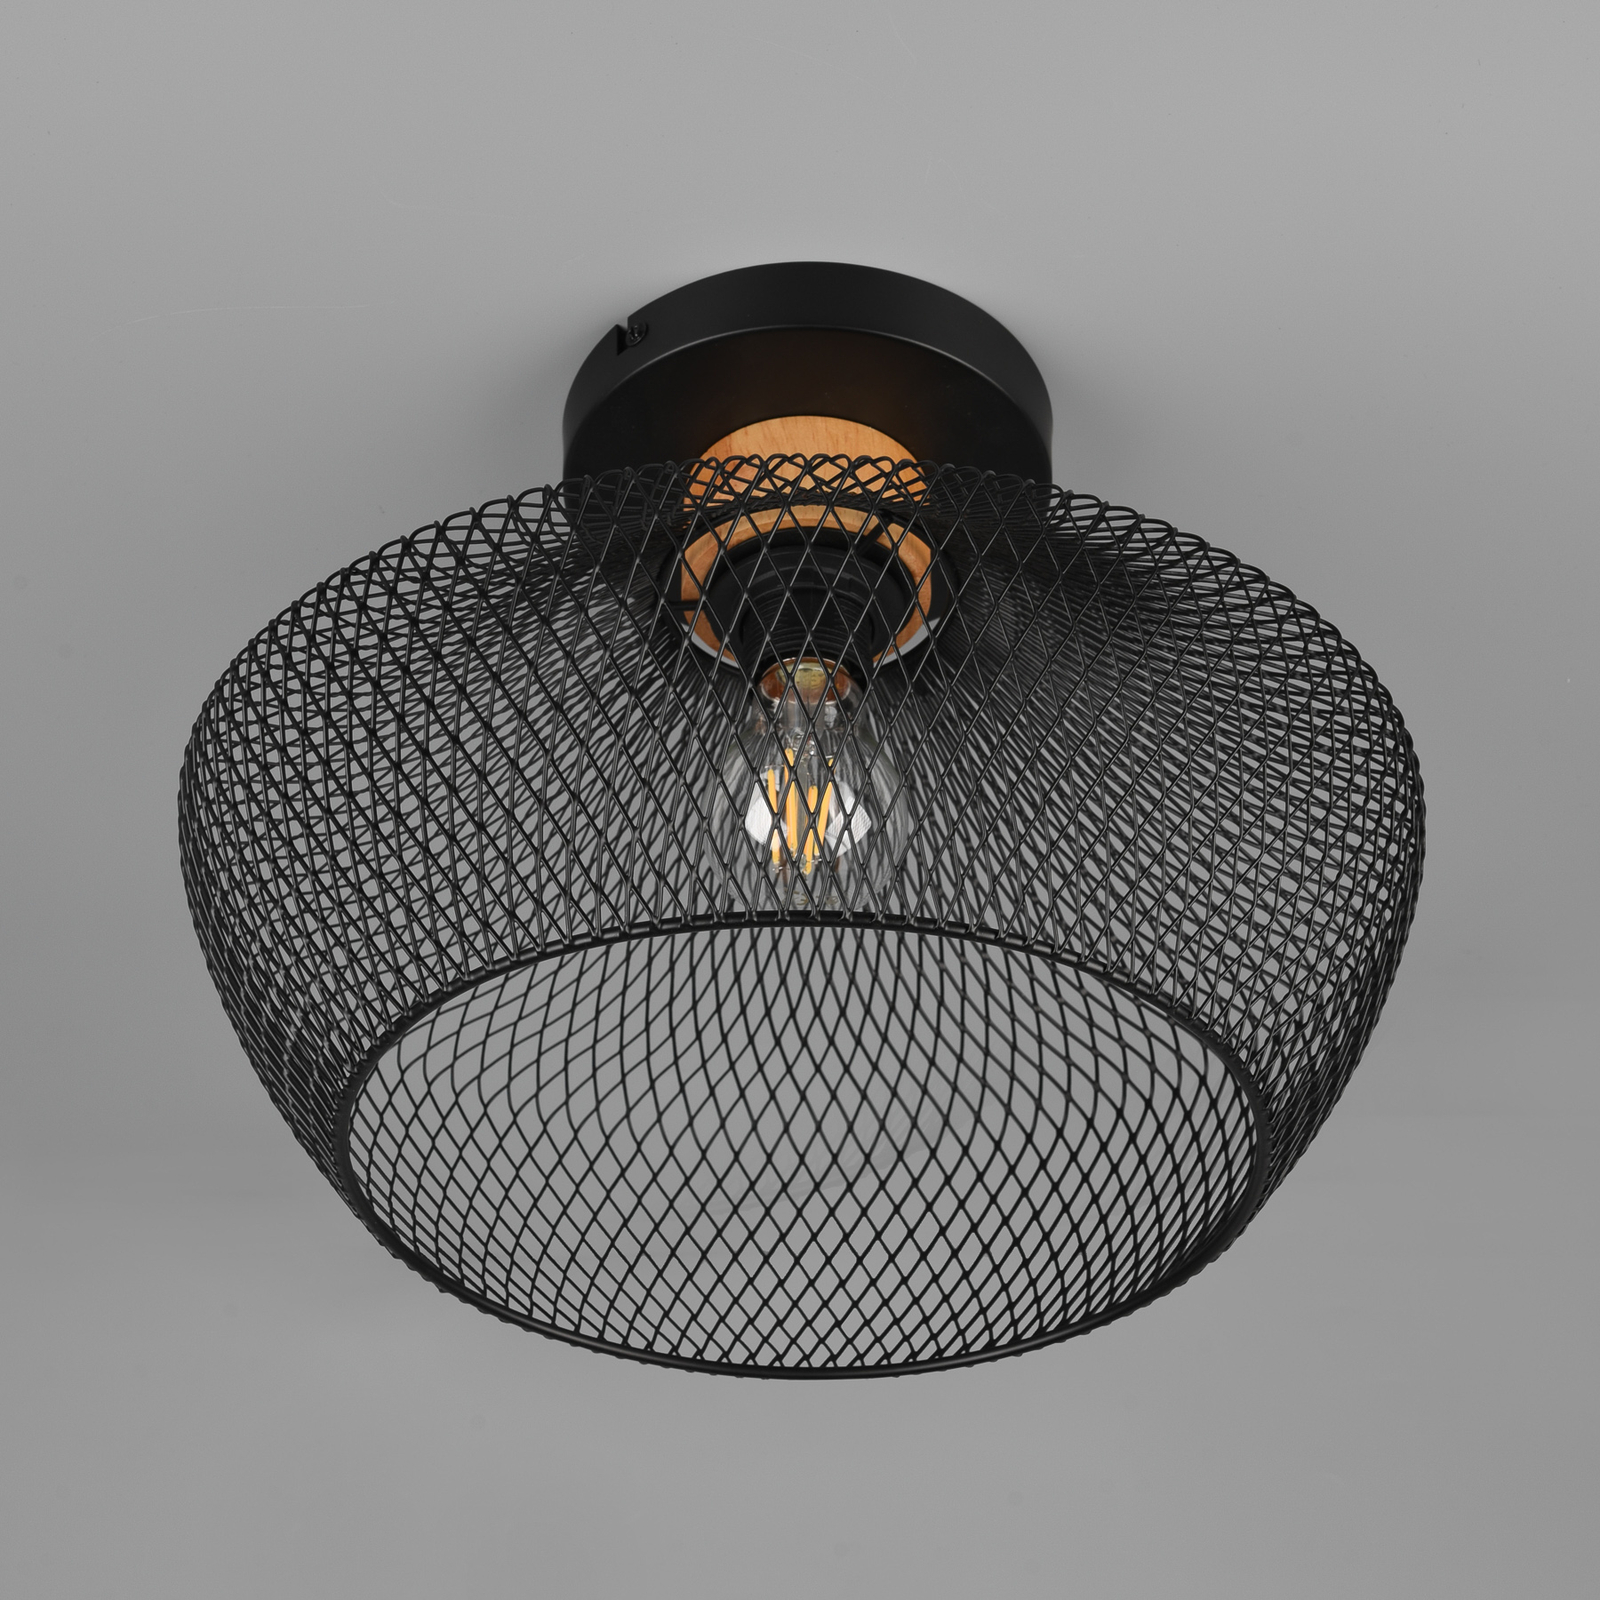 Valeria ceiling light with a latticed lampshade